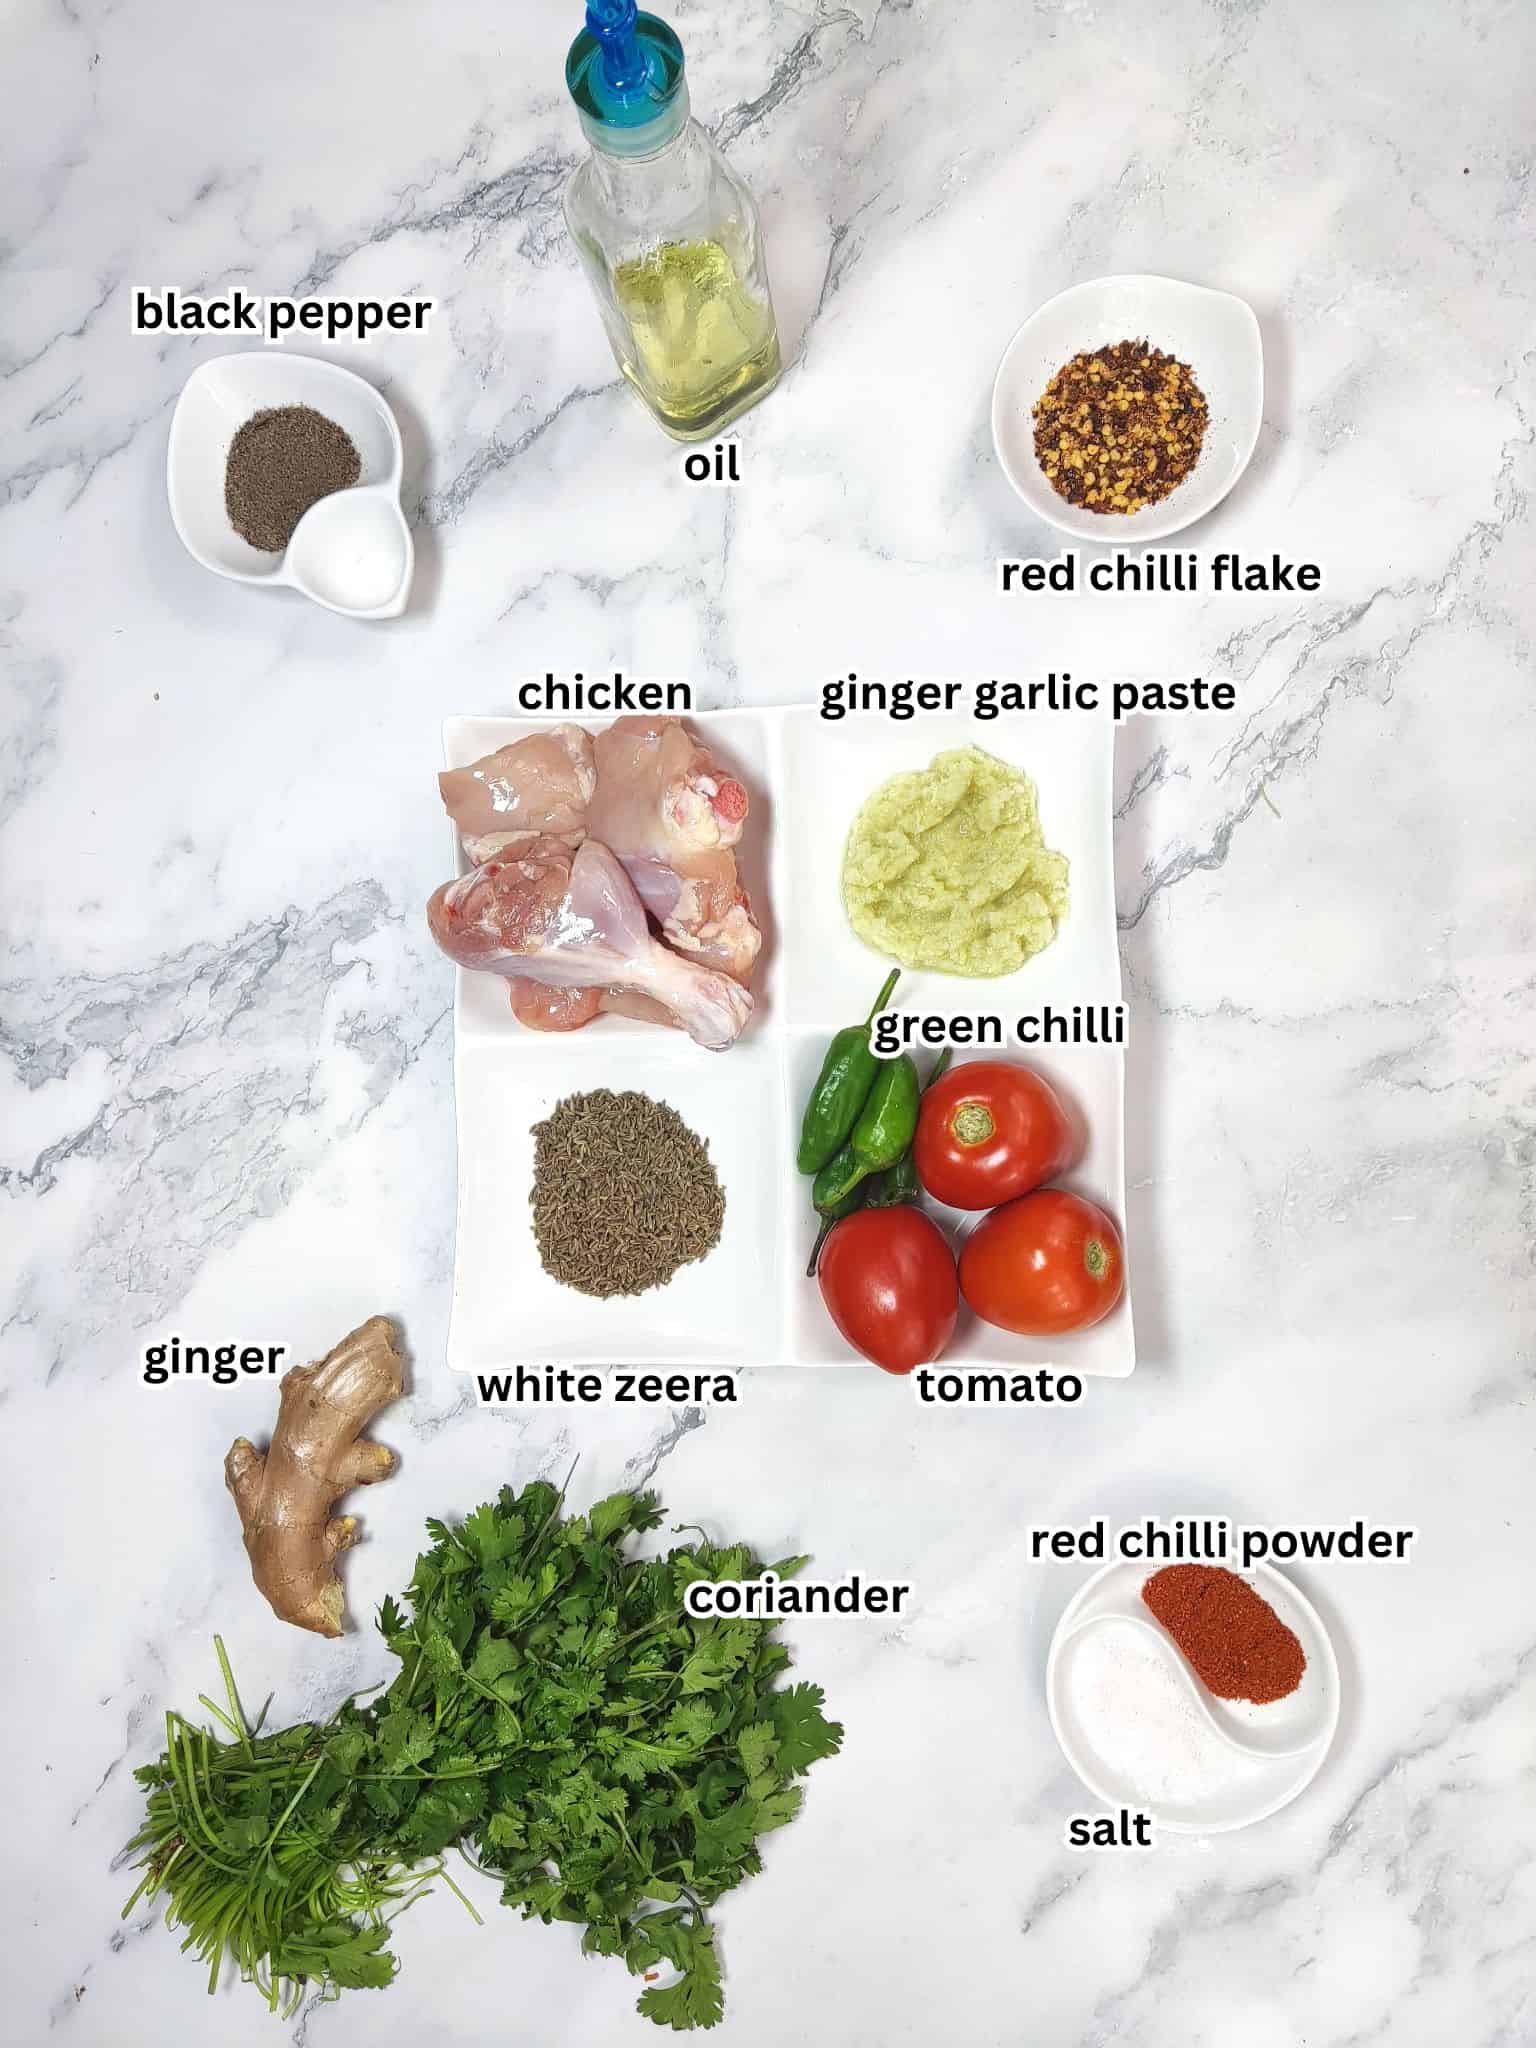 chicken karahi ingredients shown on table